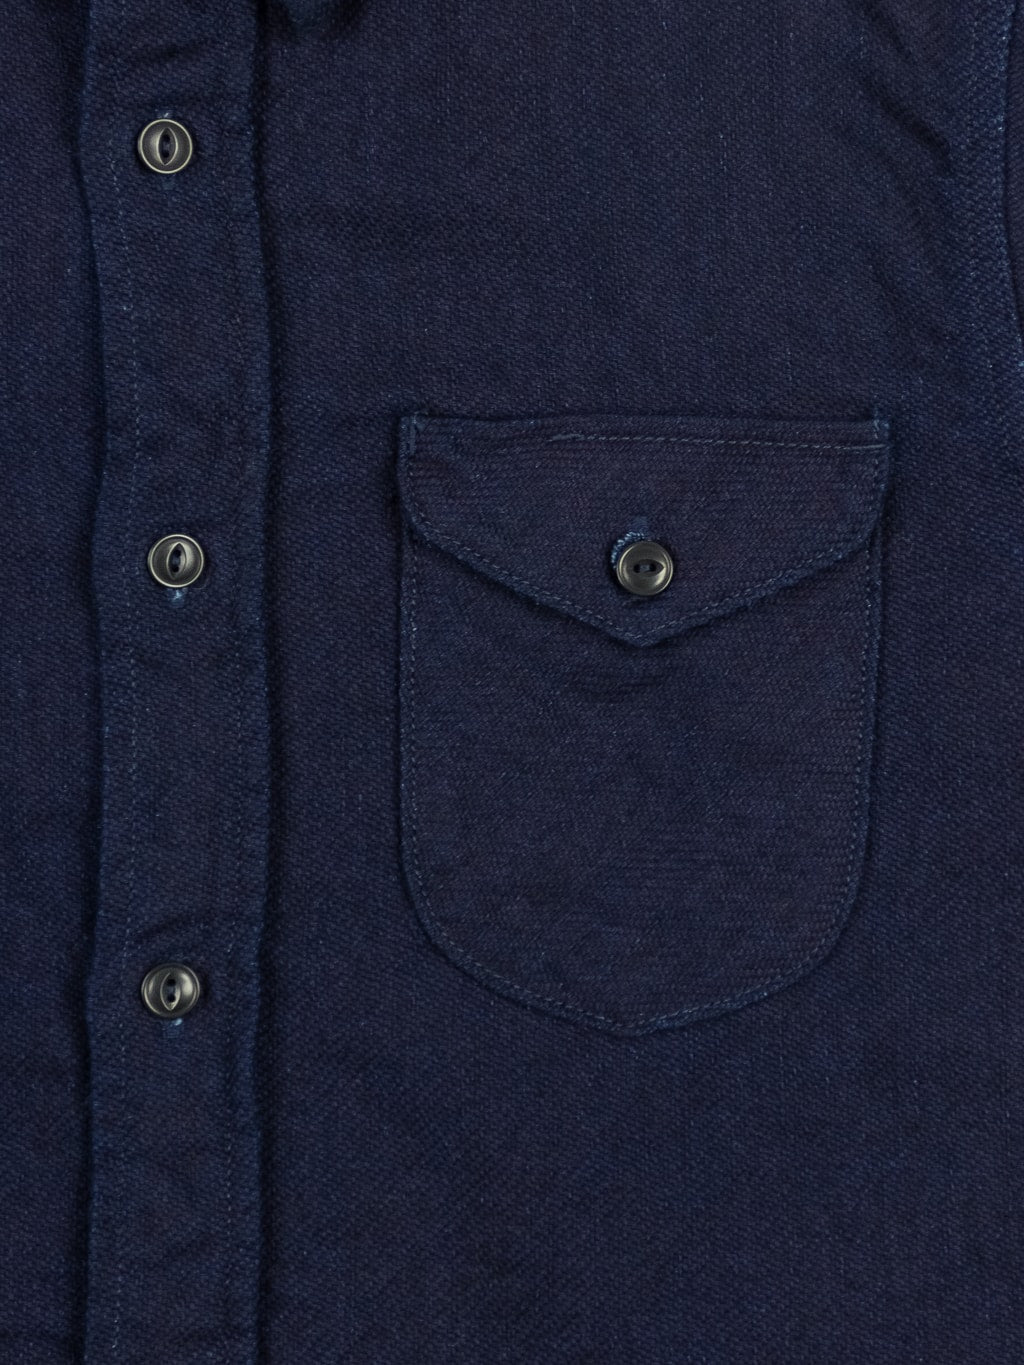 UES Indigo Heavy Selvedge Flannel Shirt chest pocket detail